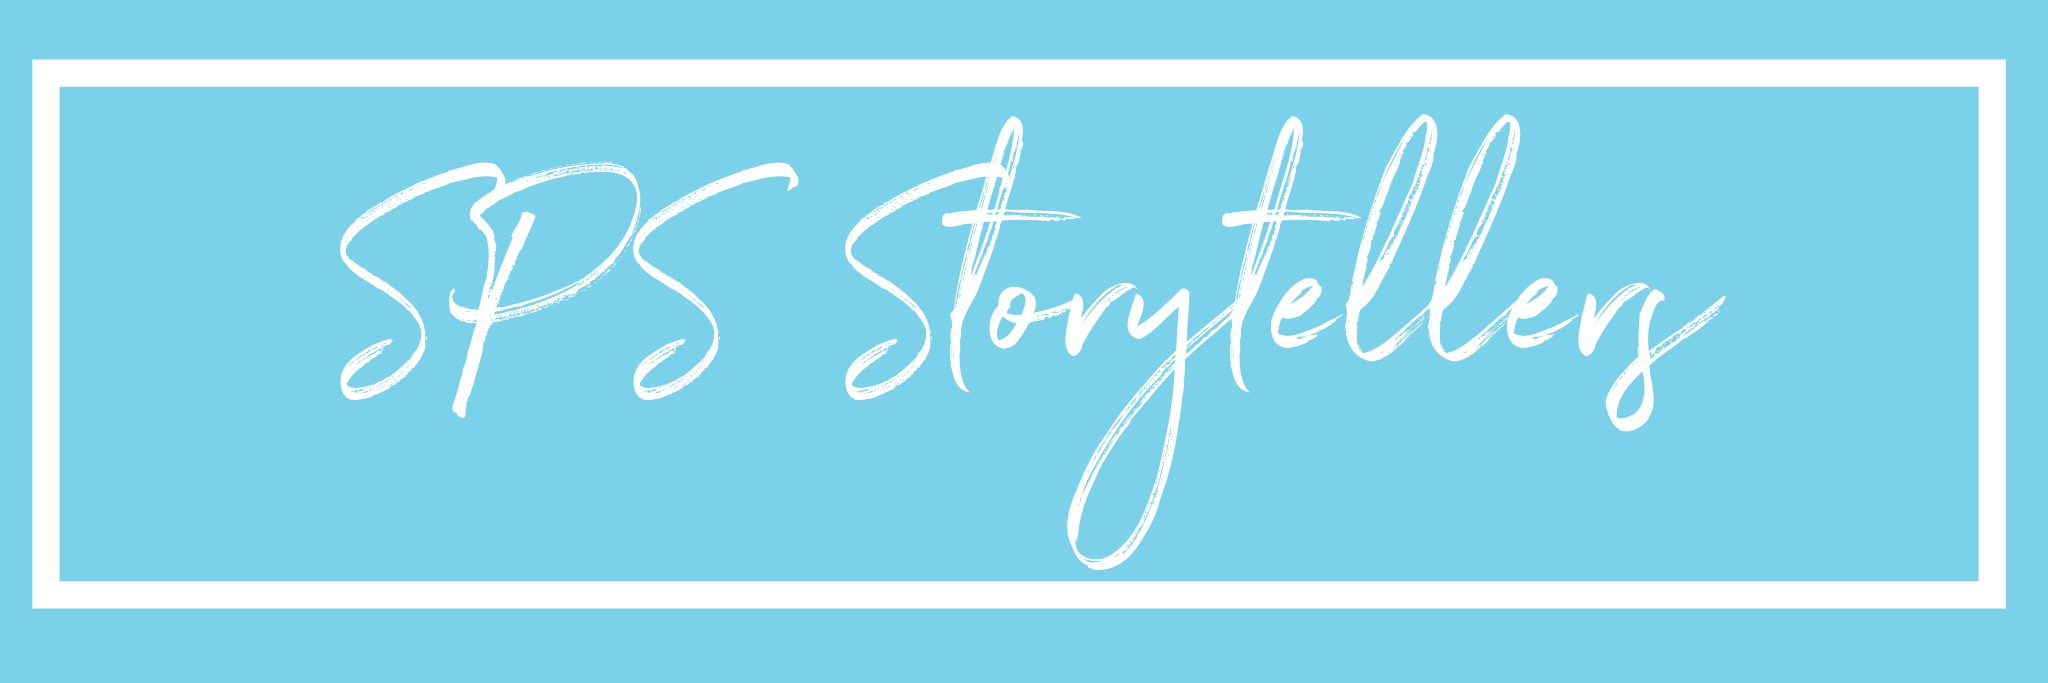 Storytellers Heather's Surrogacy Story